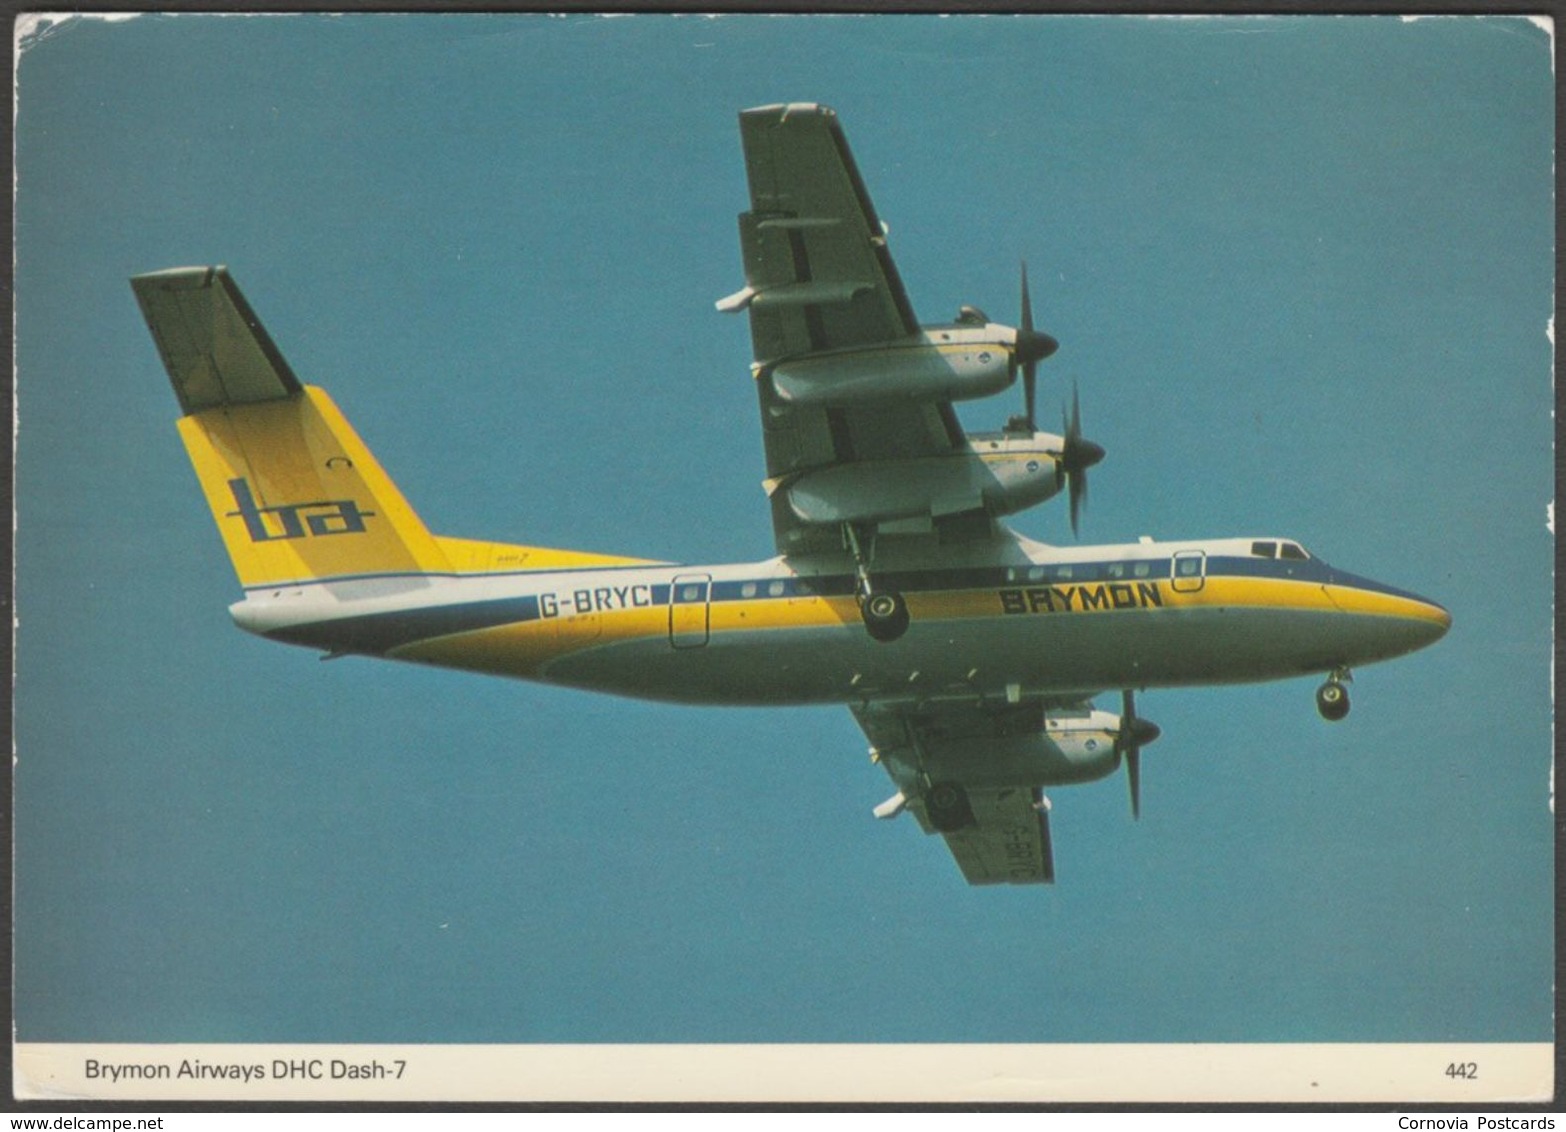 Brymon Airways DHC Dash-7 - Charles Skilton Postcard - 1946-....: Modern Era